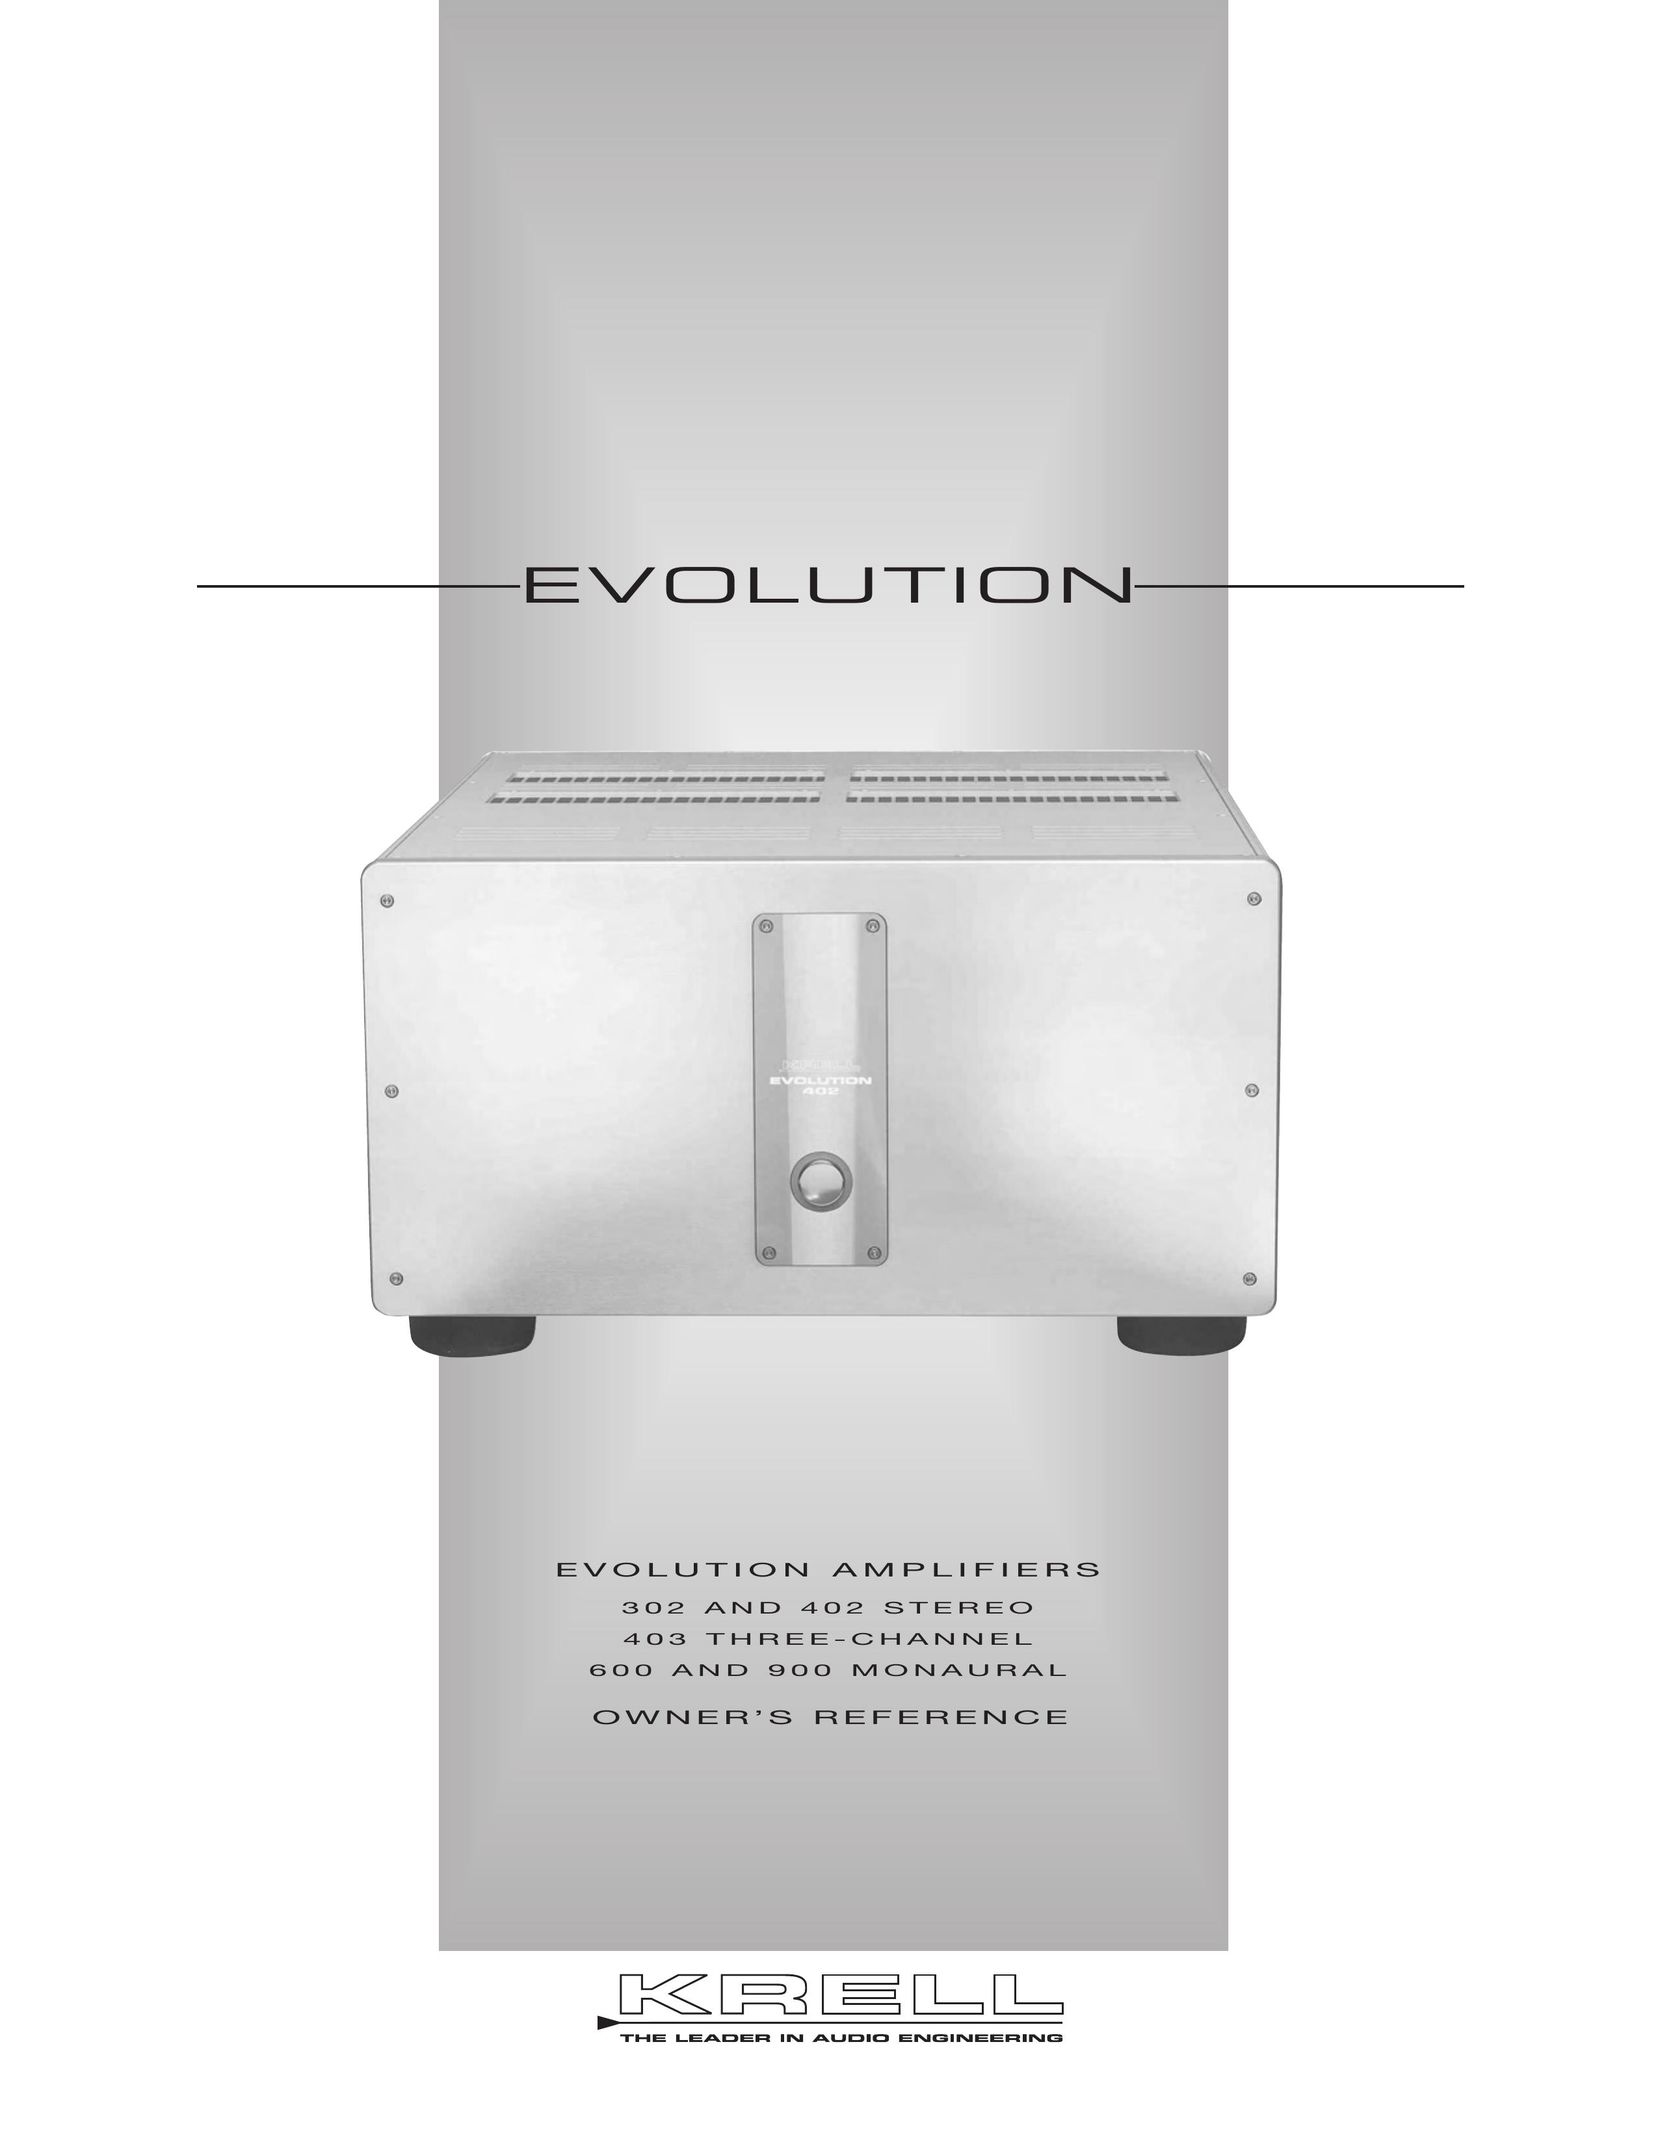 Krell Industries Evolution Stereo Amplifier User Manual